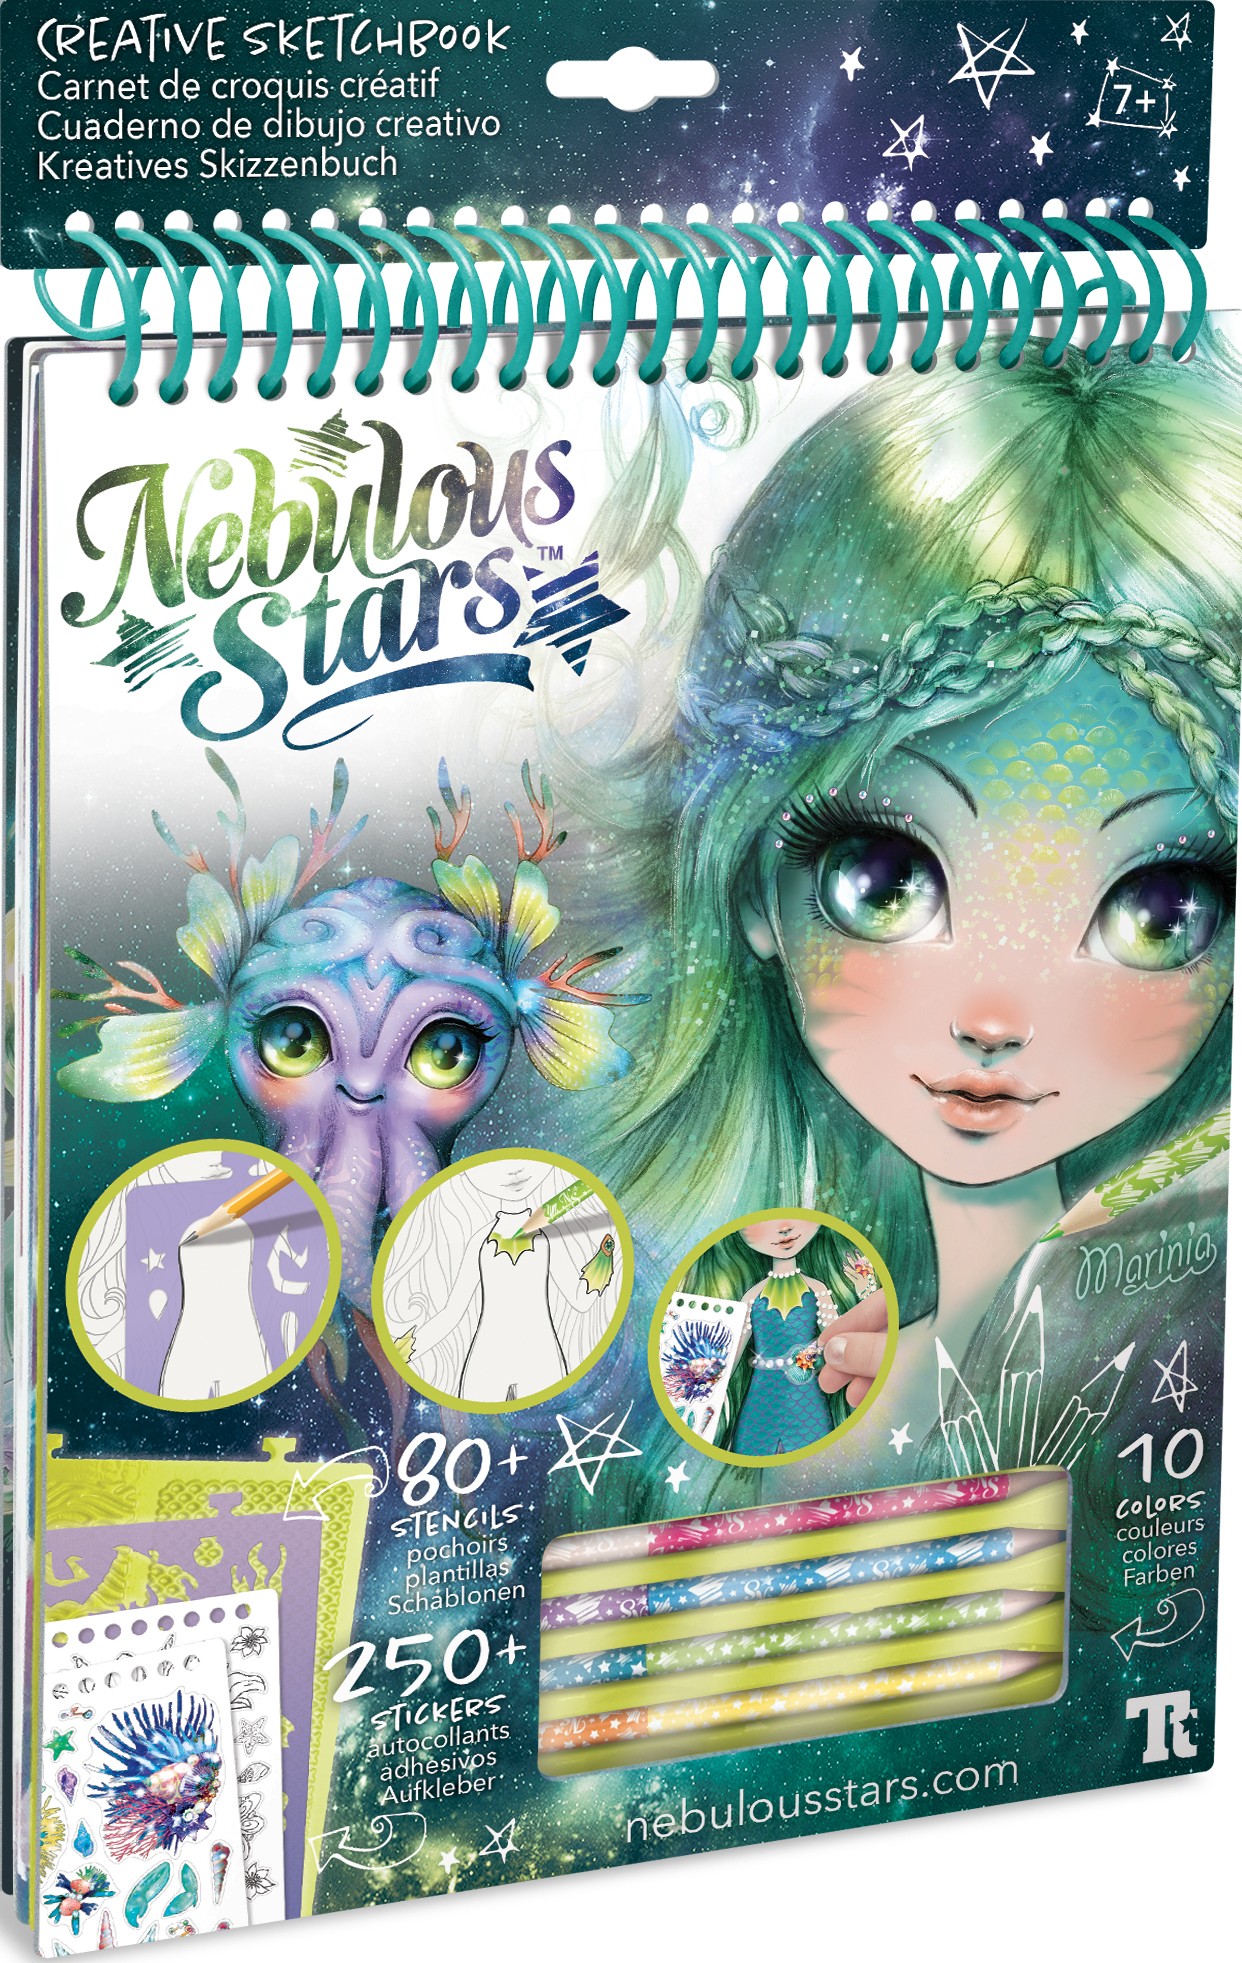 Boîte du jeu Nebulous Stars - Carnet de croquis créatif Marinia